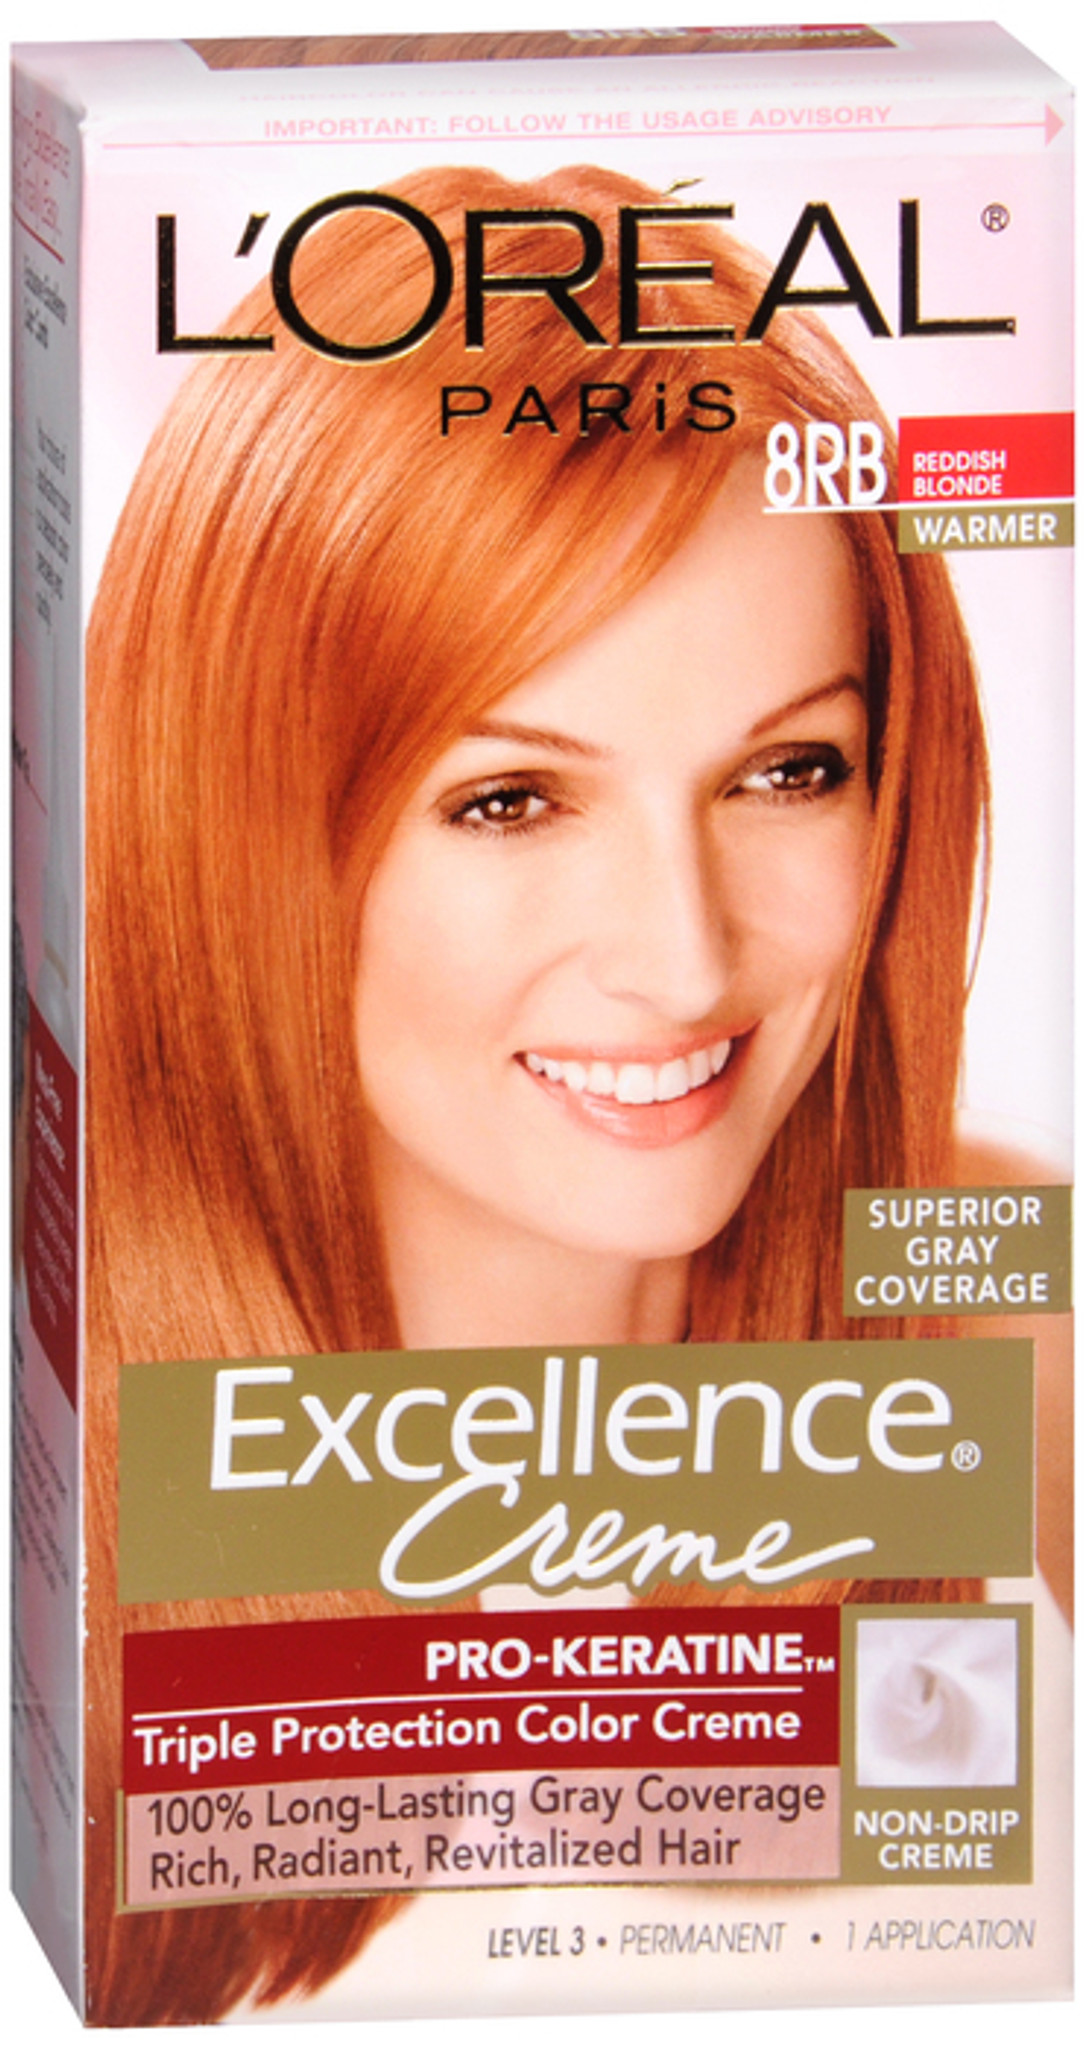 L'Oreal Paris Excellence Creme Permanent Hair Color 8RB Medium Red Blonde -  